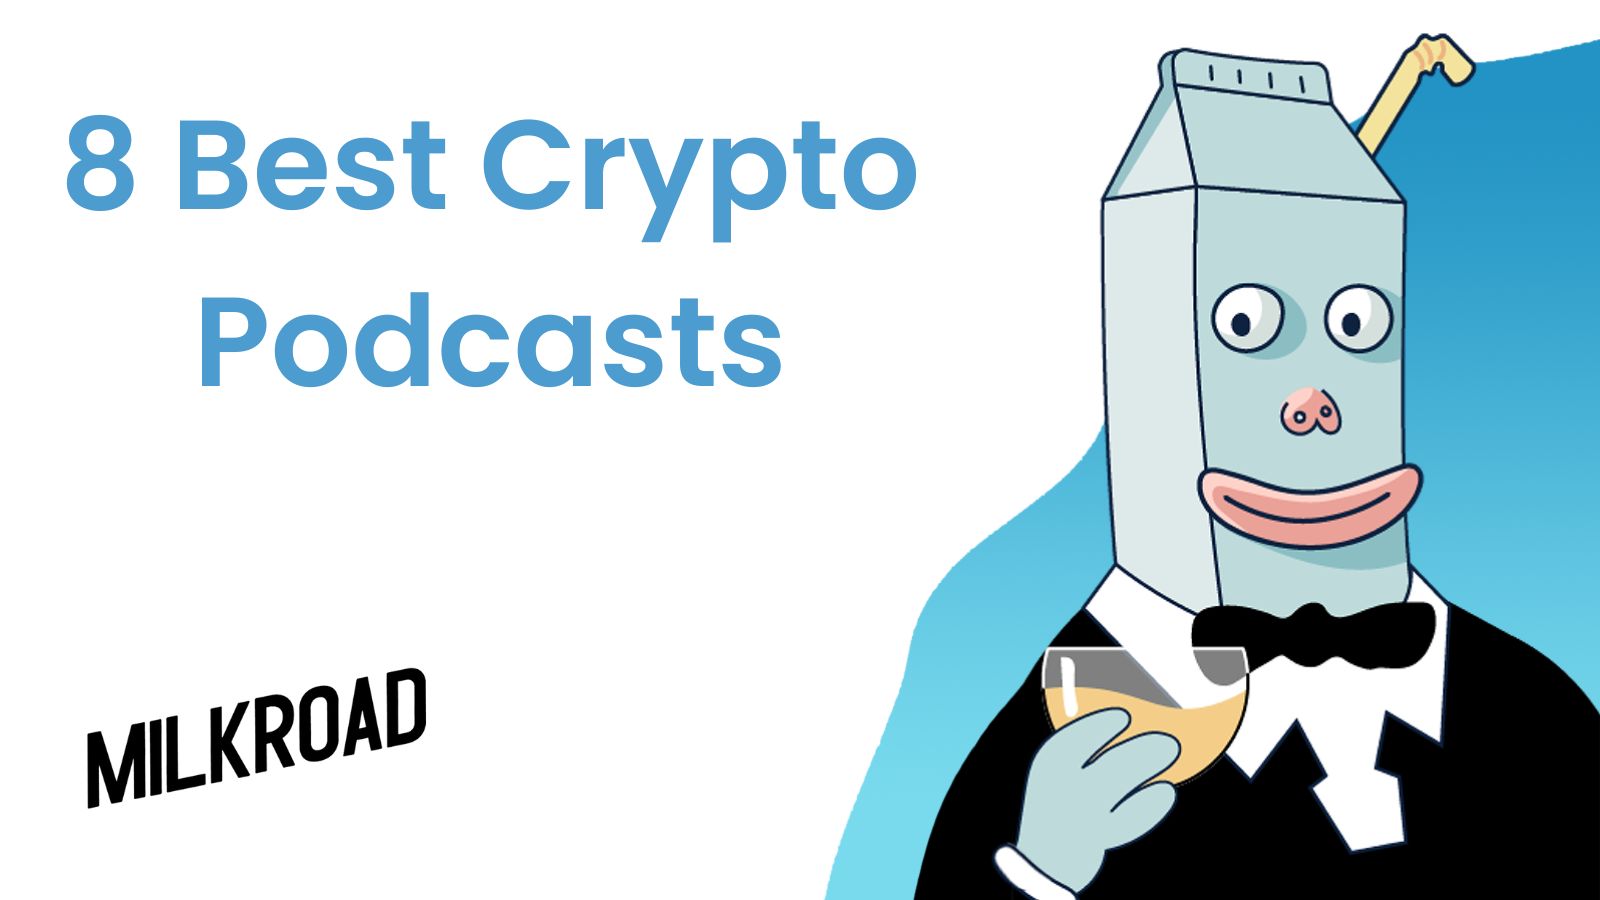 8 Best Crypto Podcasts